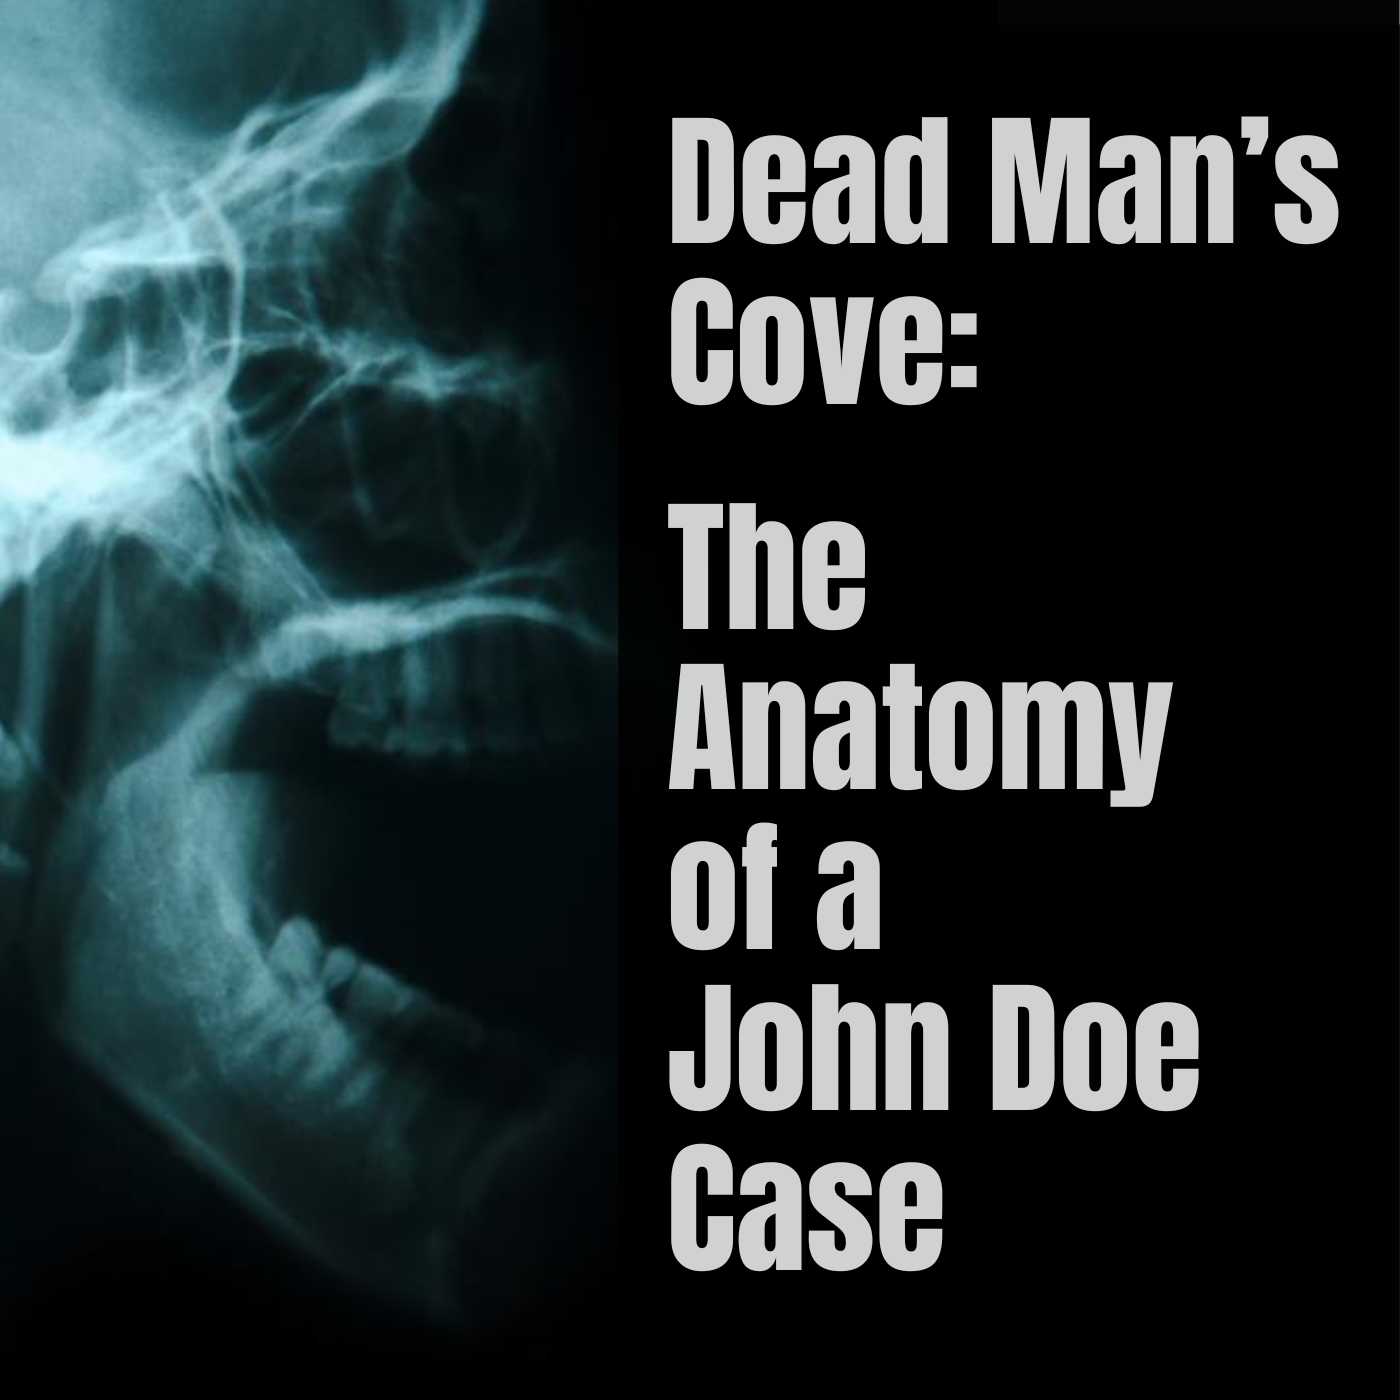 Dead Man's Cove: The Anatomy of a John Doe Case